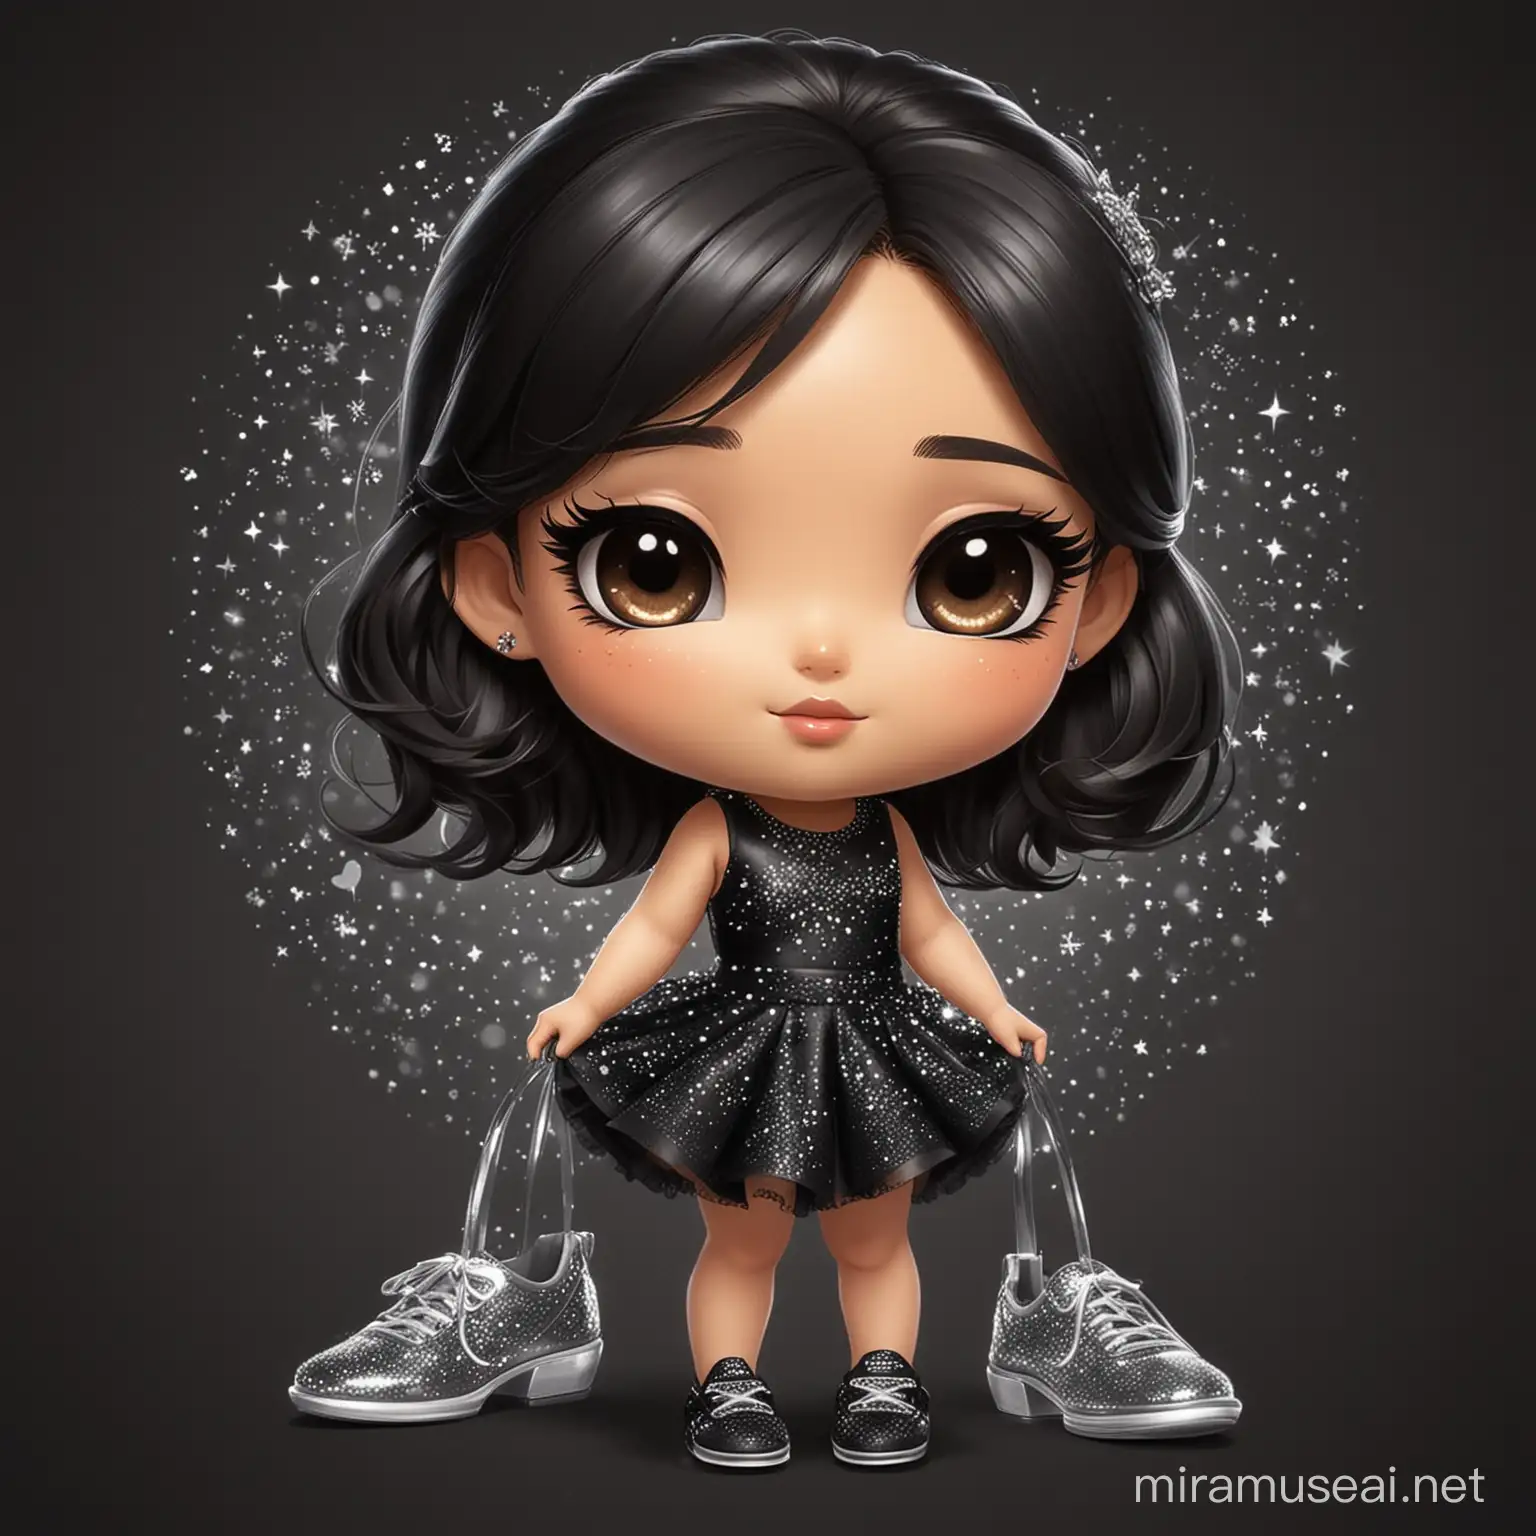 Chibi Latina Girl Catalina in Elegant Black Dress on Glittery Background